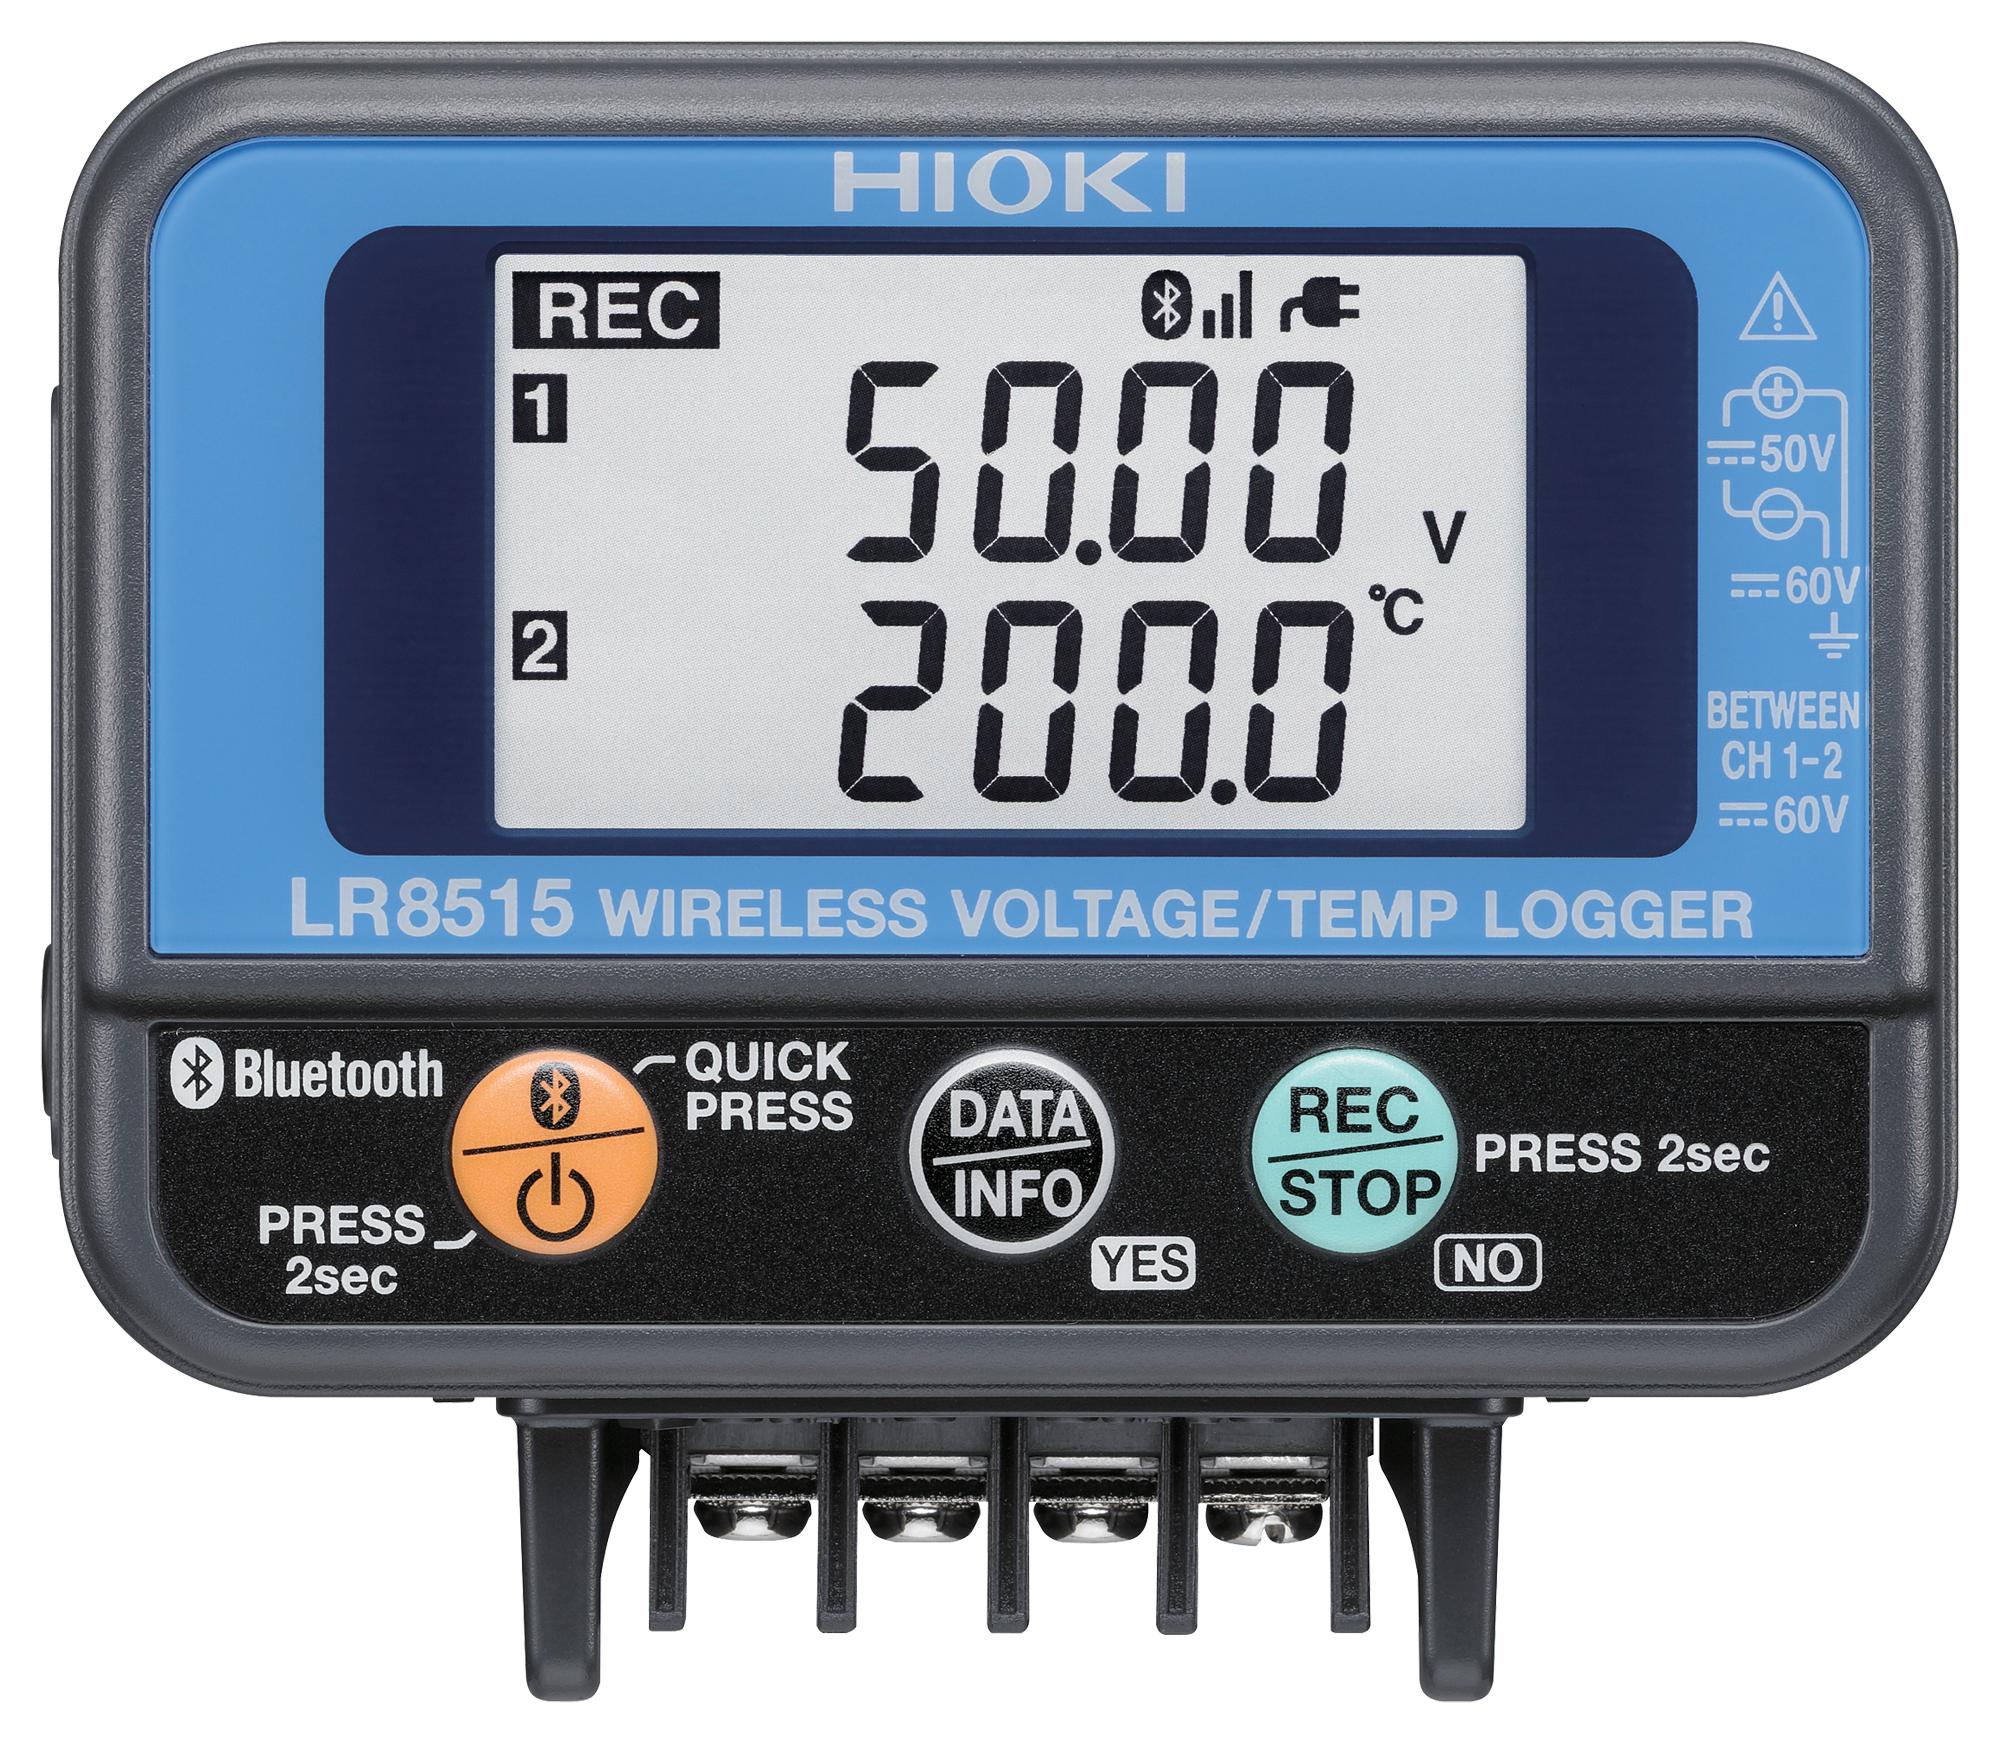 Hioki Lr8515 Wireless Voltage/temp Logger, 2-Ch